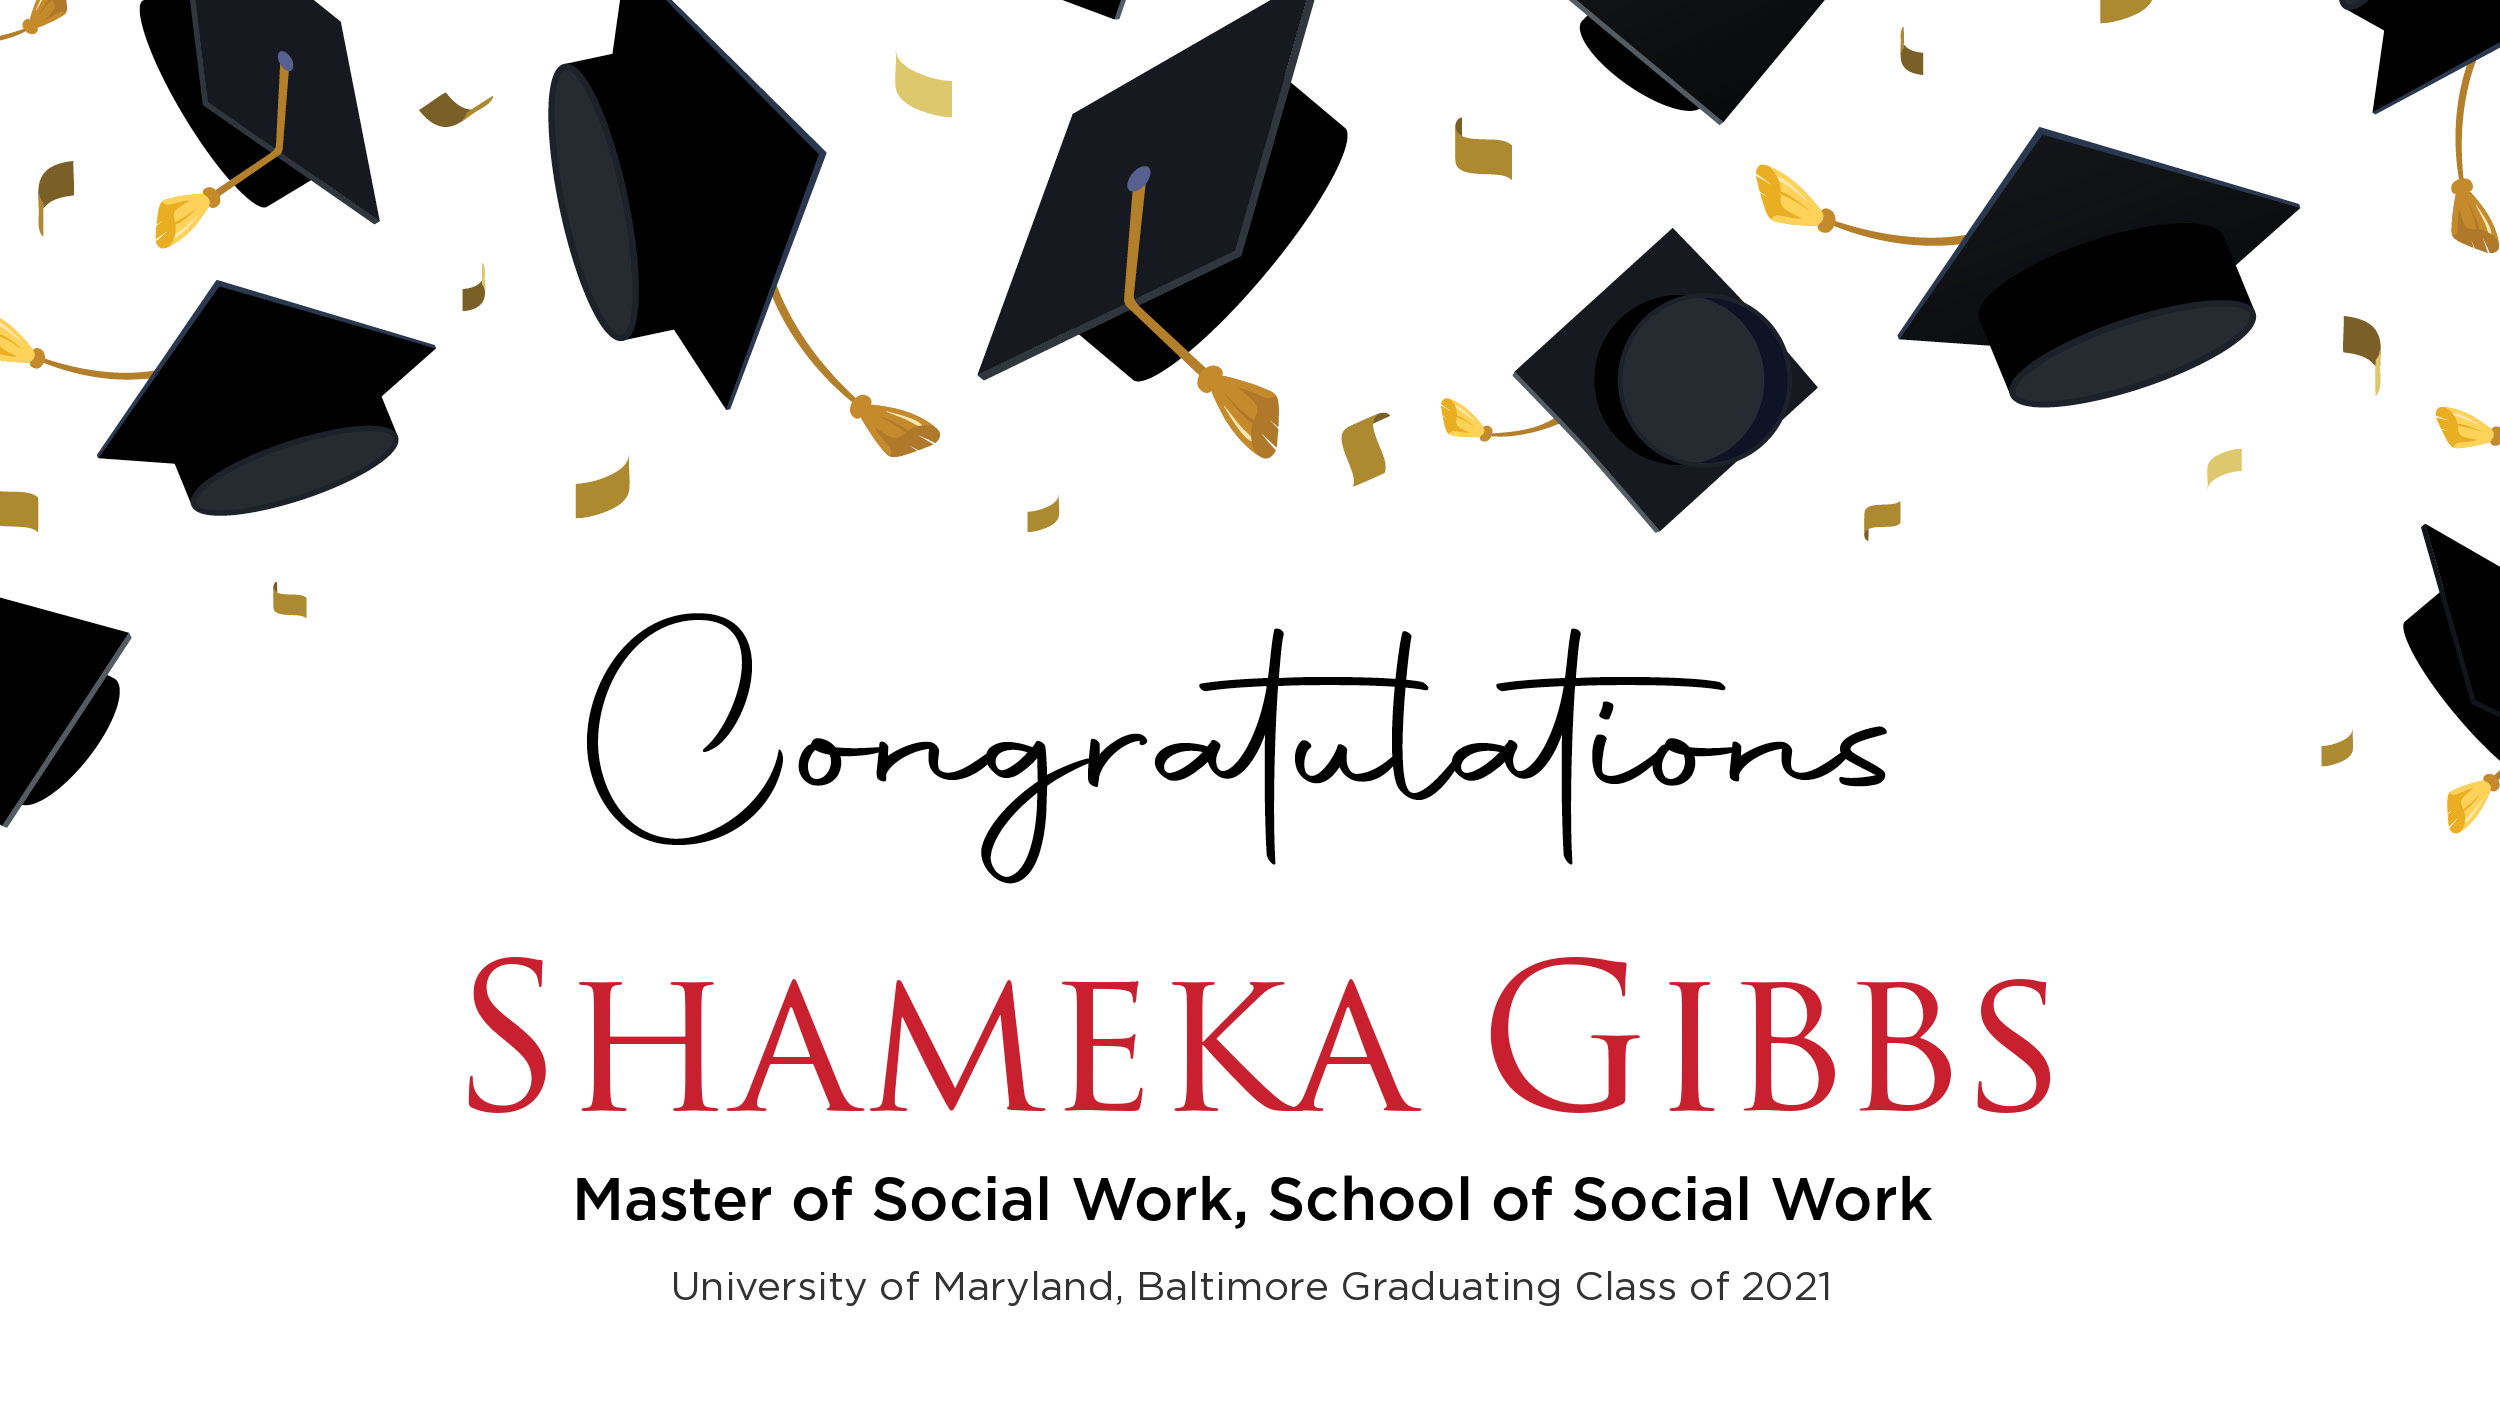 Congratulations Shameka Gibbs, Master of Social Work